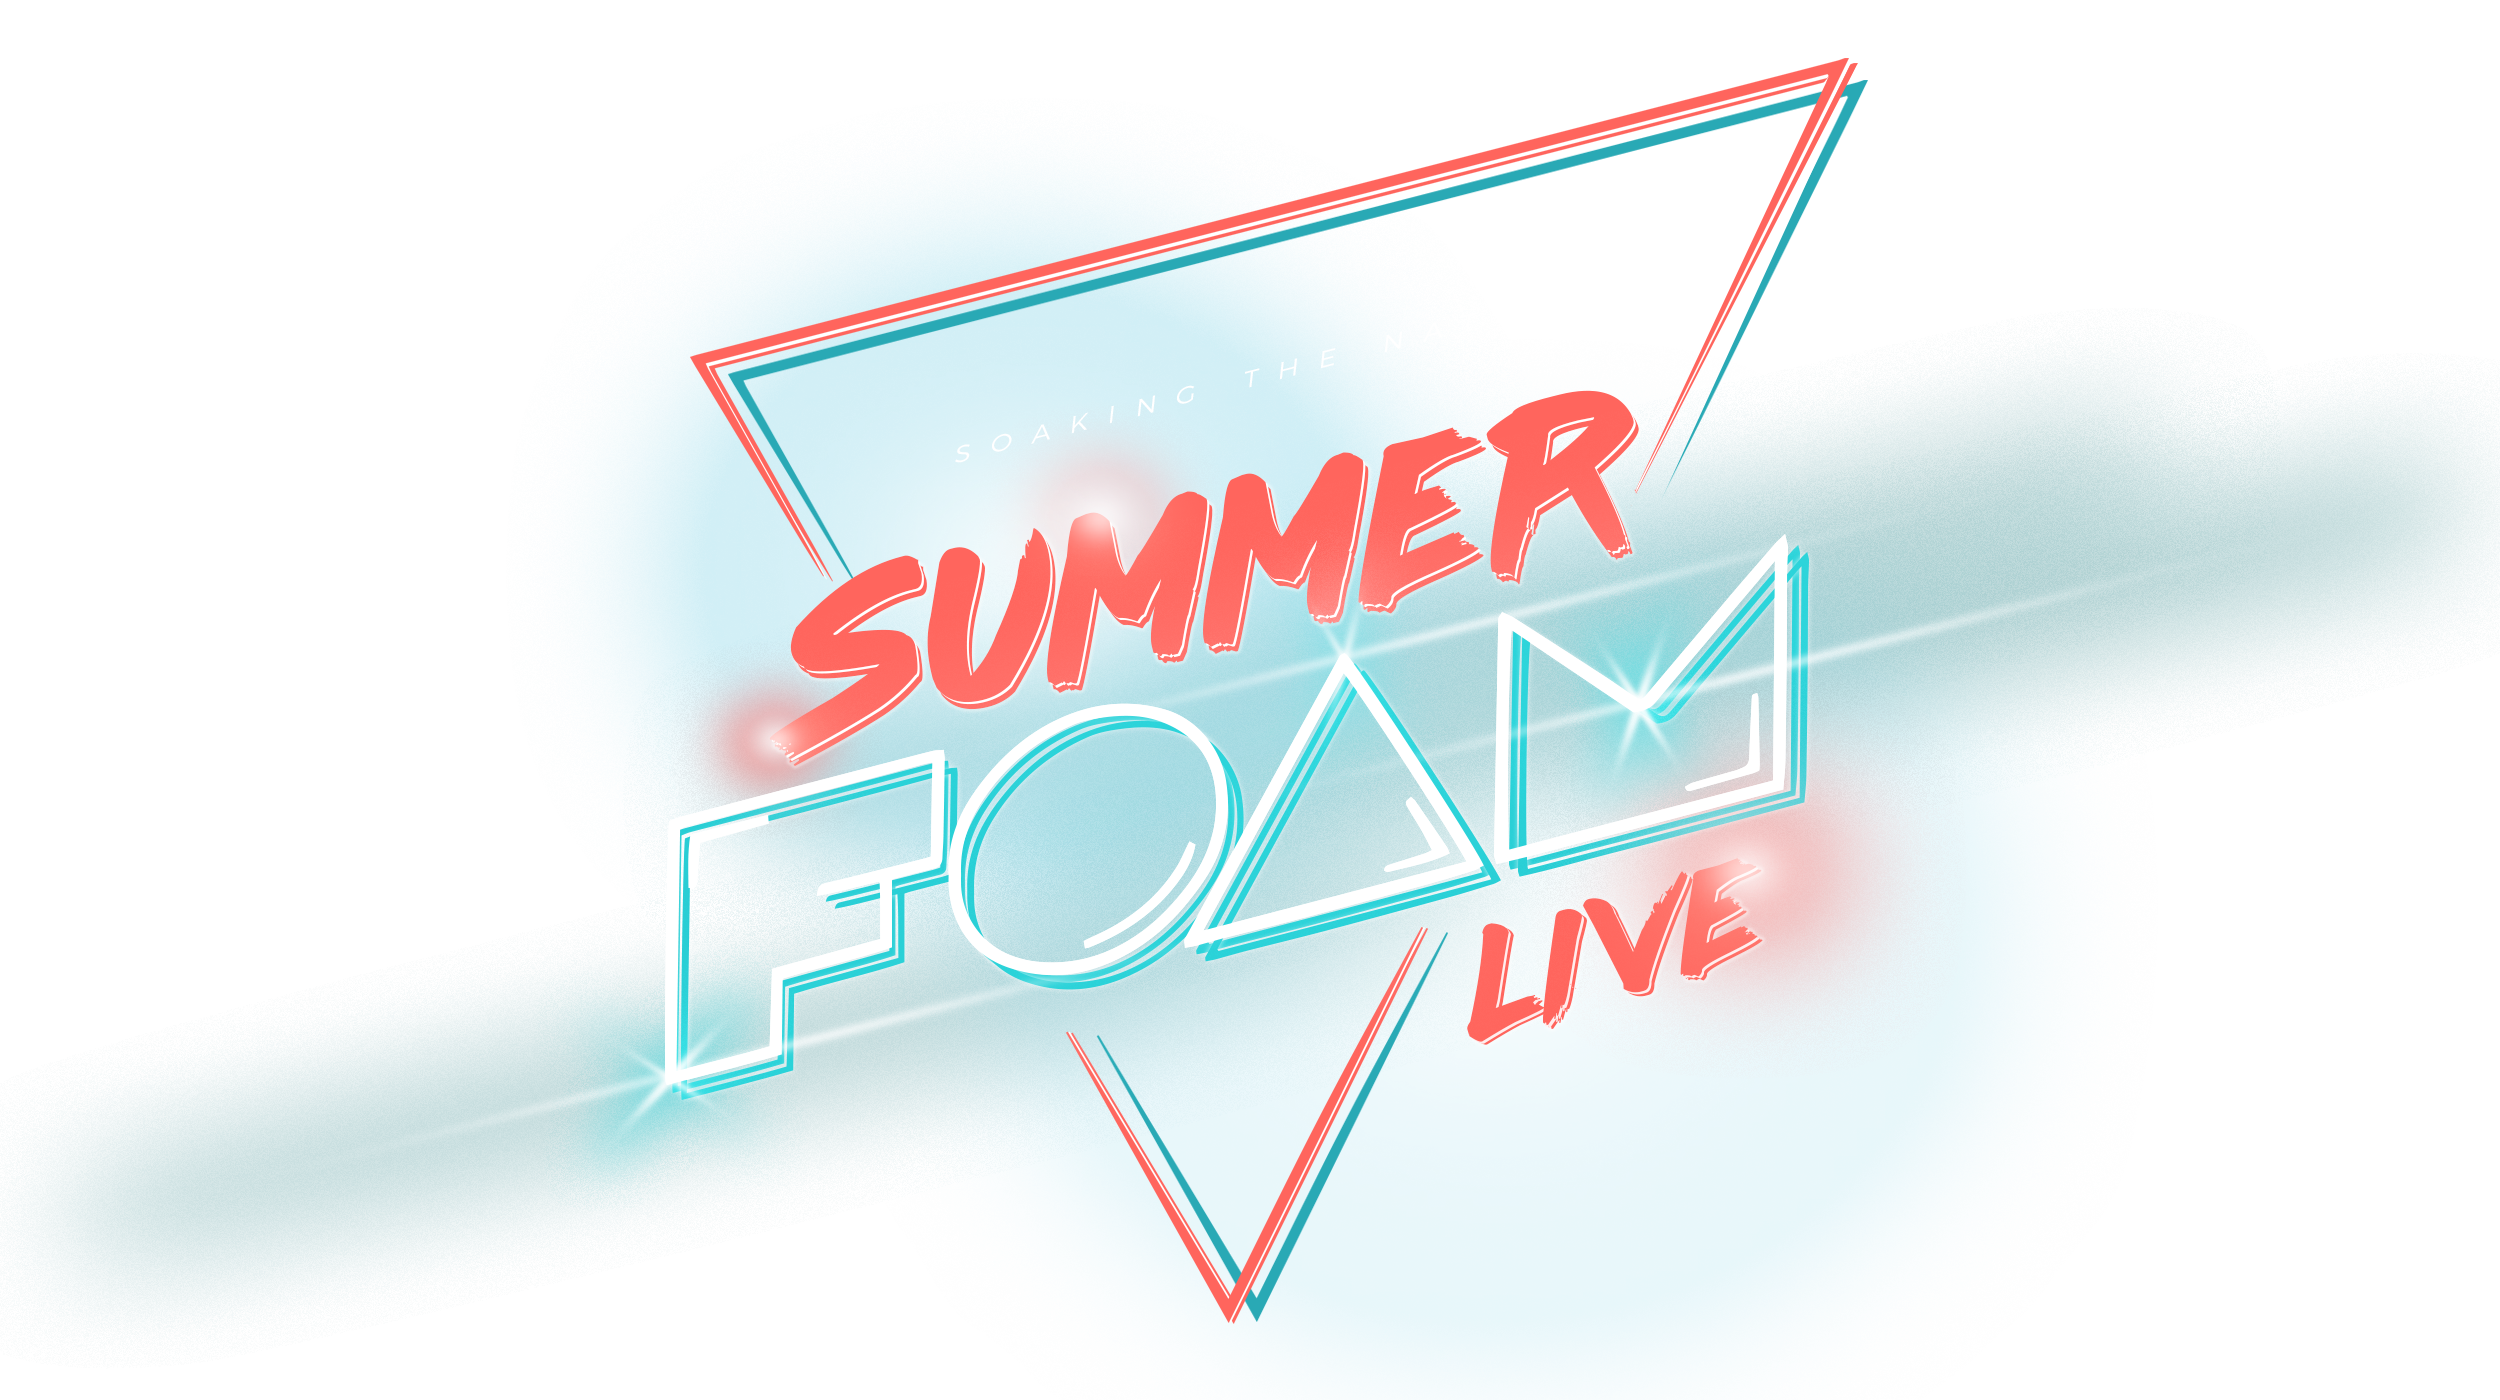 Summerfoam Live